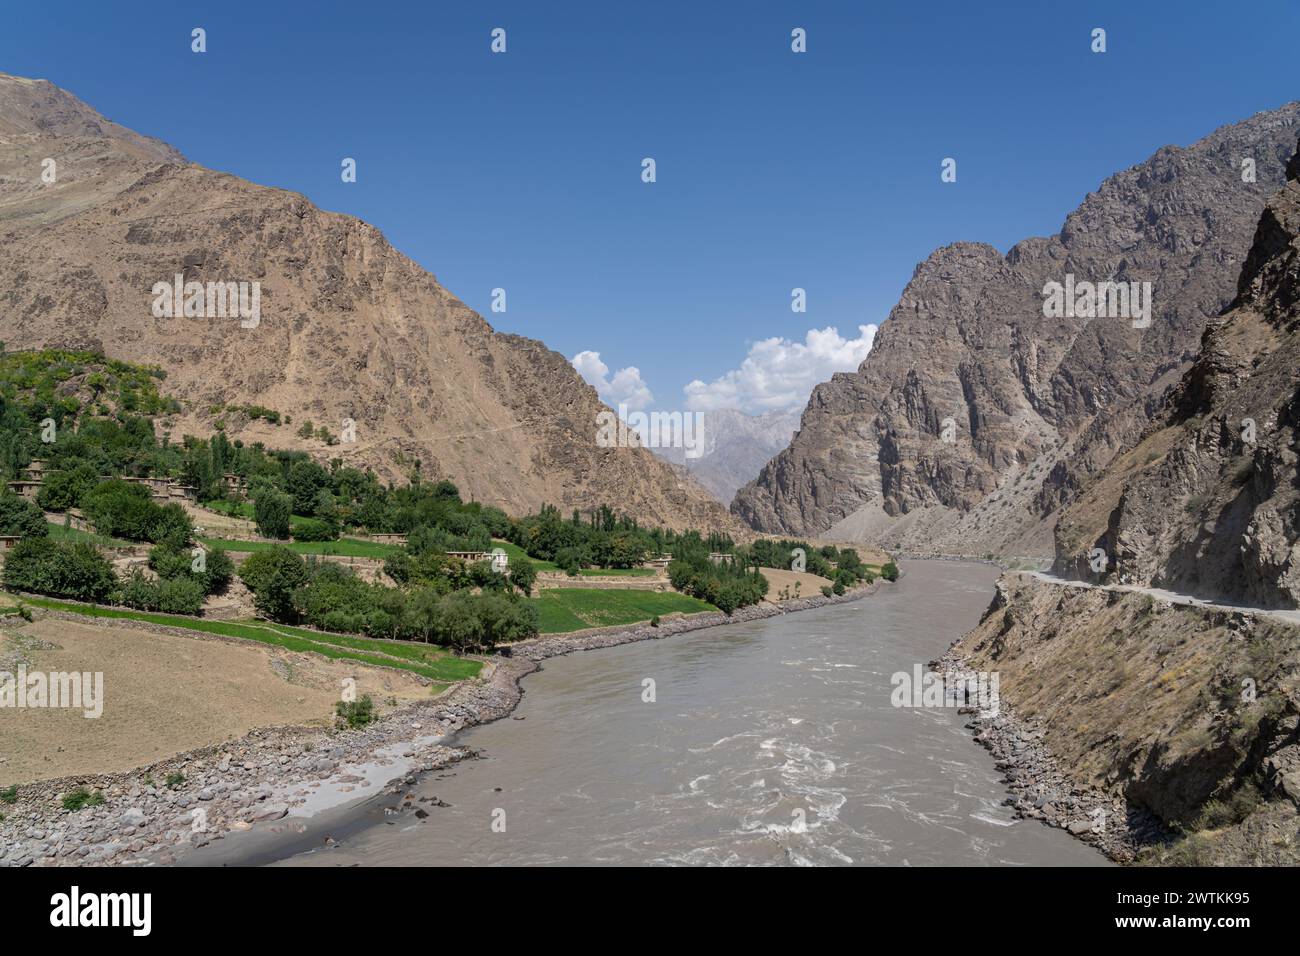 Scenic mountain landscape view along Pamir Highway of Panj river valley separating Tajikistan and Afghanistan, Darvaz, Gorno-Badakhshan, Tajikistan Stock Photo